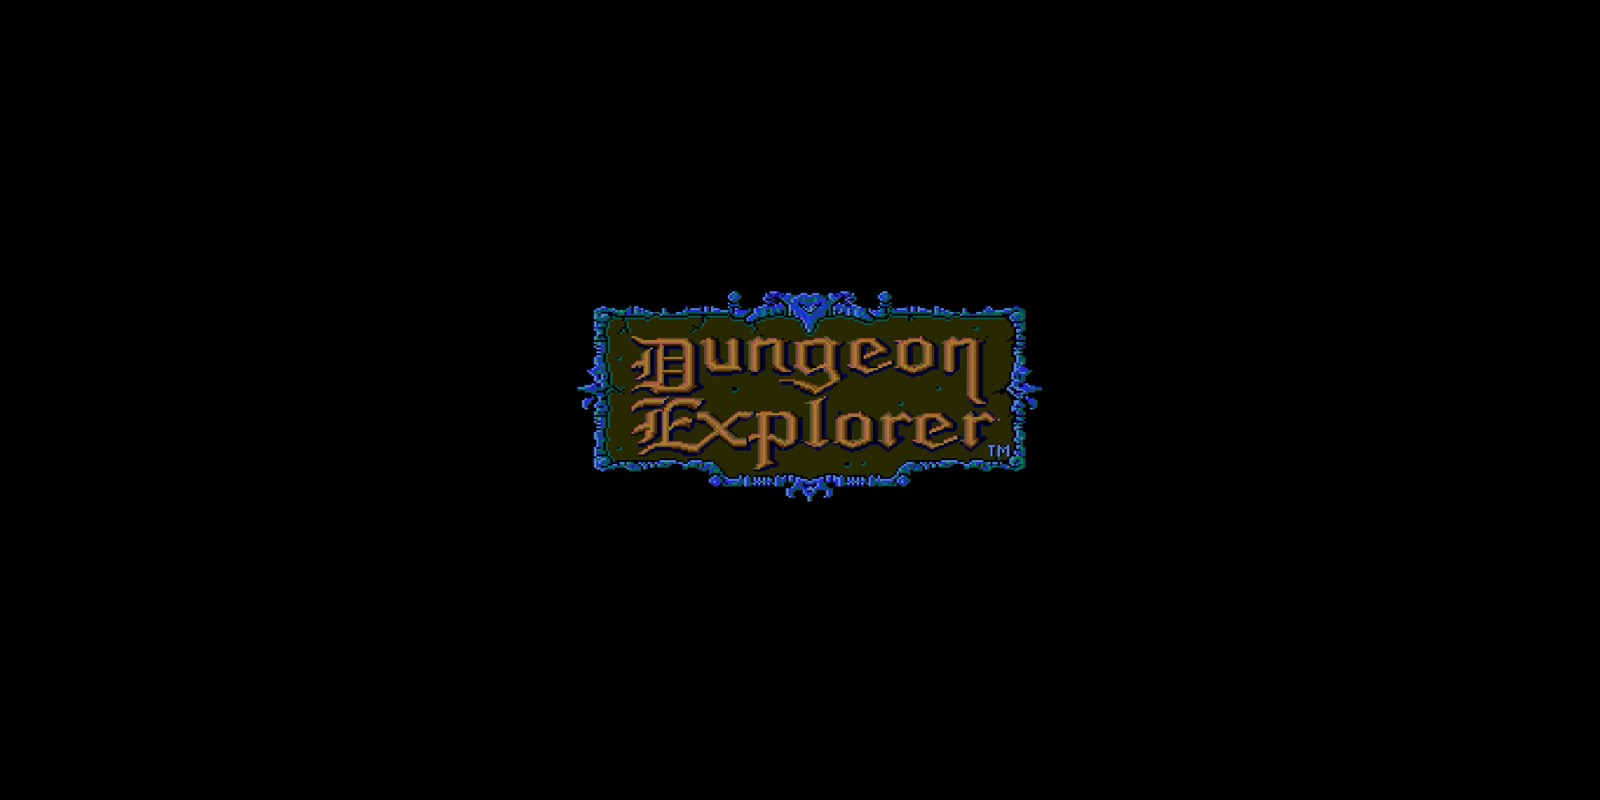 Dungeon Explorer™